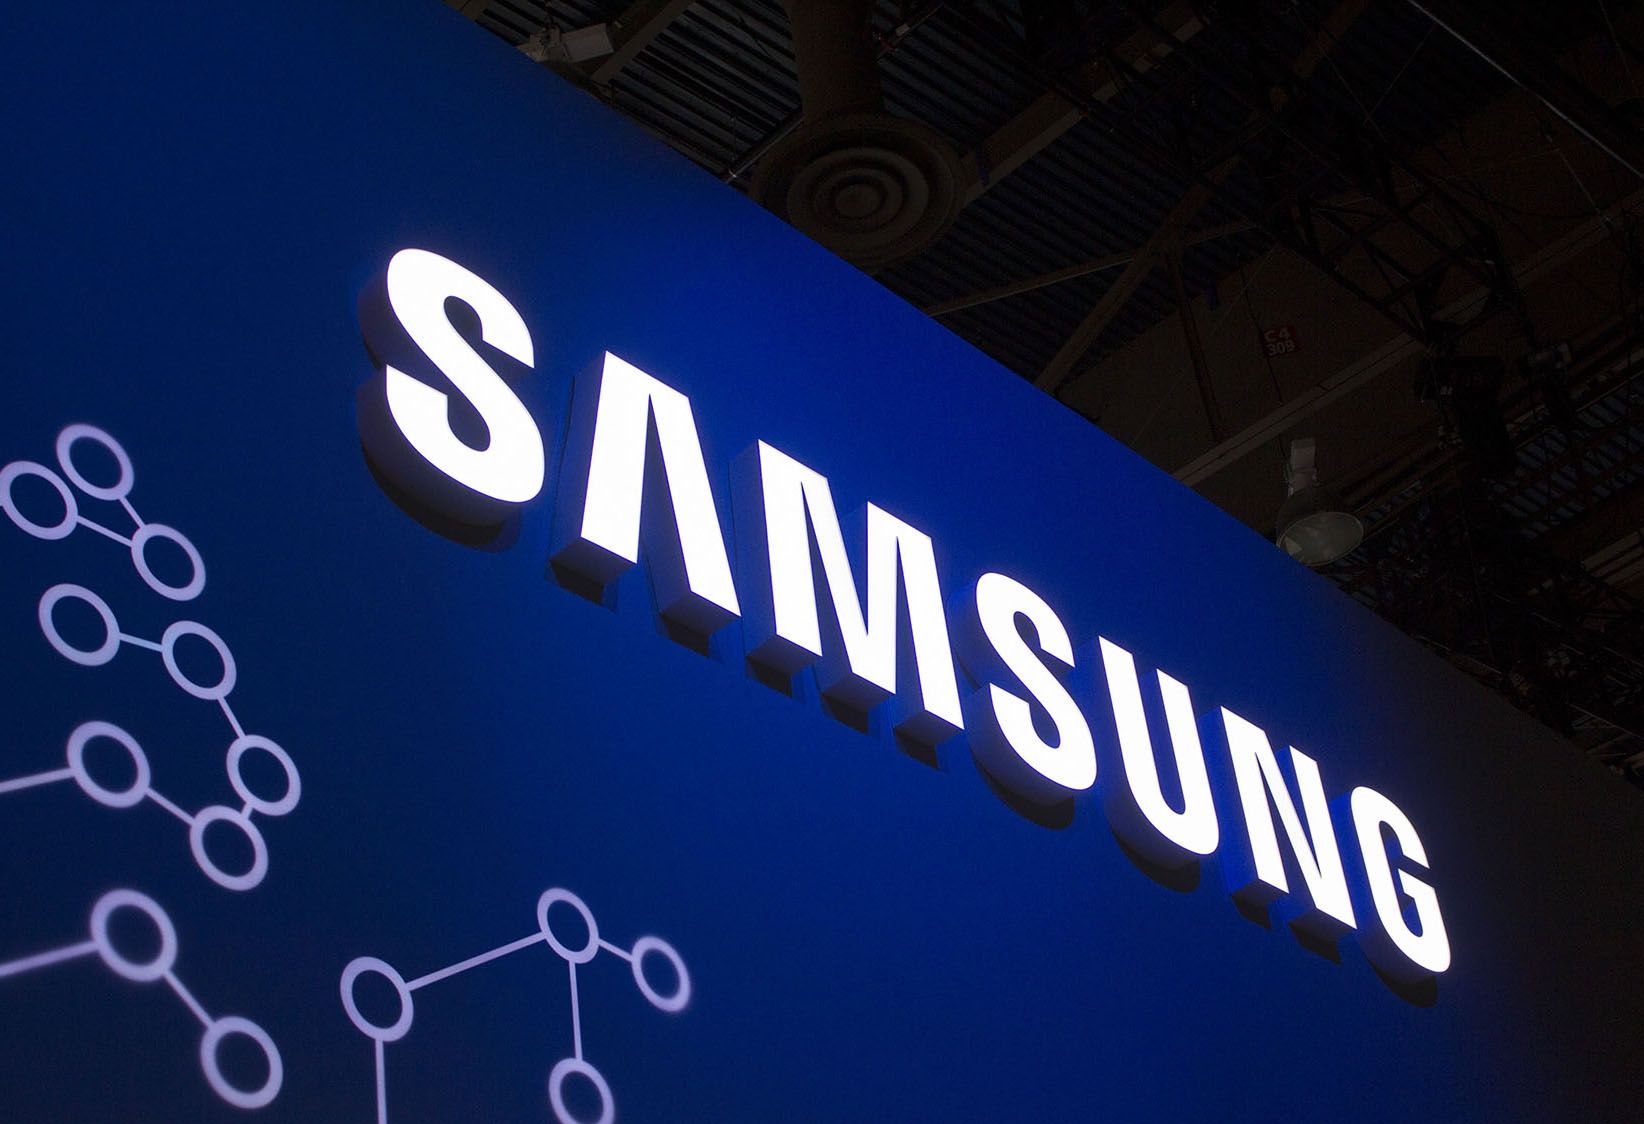 Samsung แถลงรายได้ Q1 | ภาพรวมดูไม่จืด แต่ Smartphone กลุ่มเรือธงยังแข็งแกร่งและนวัตกรรมยังไปได้อีก